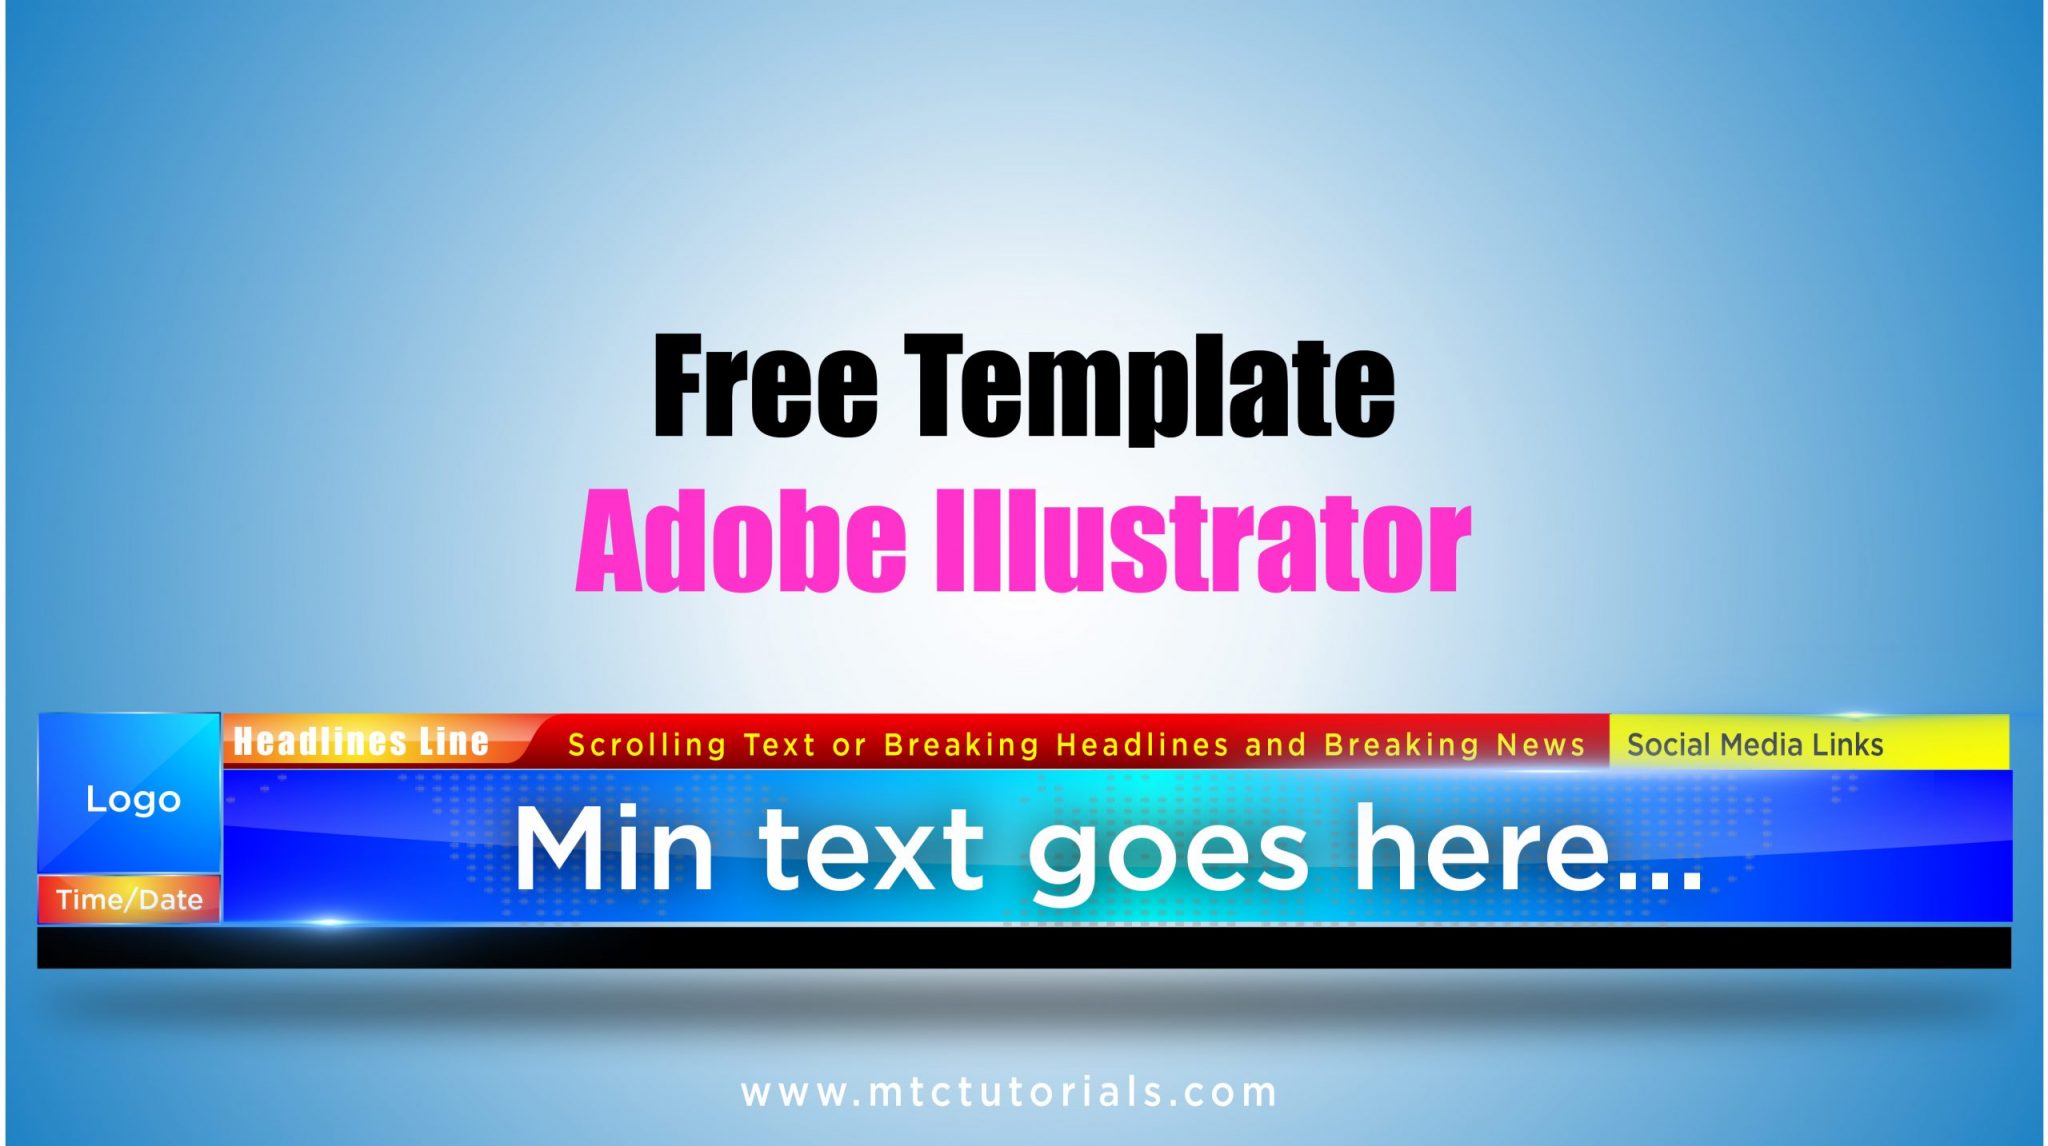 Download royality free Adobe Illustrator templates